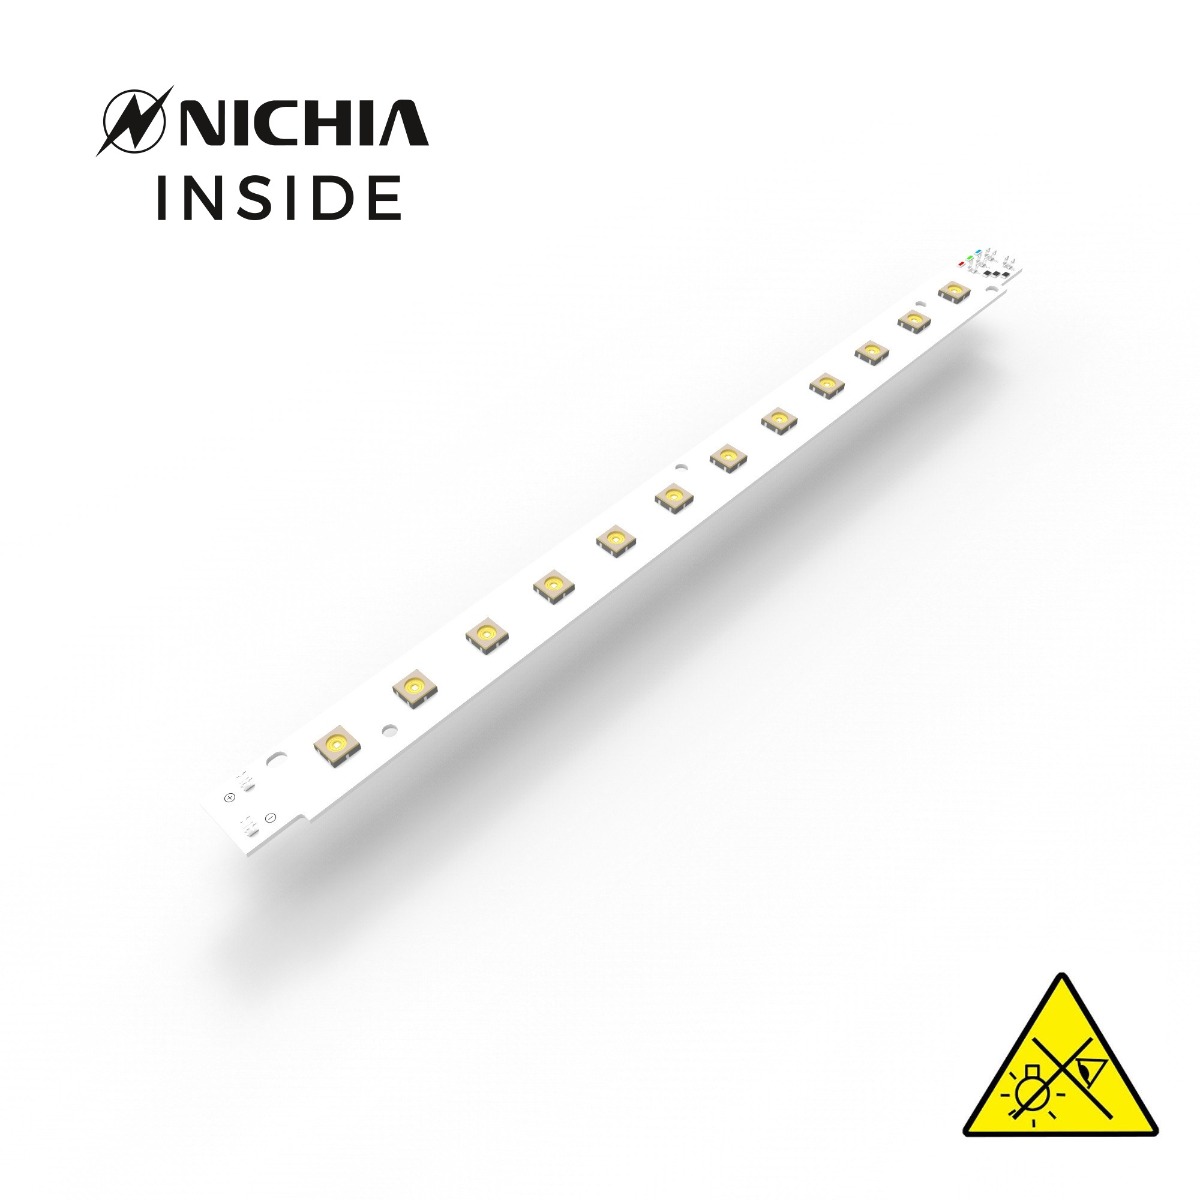 Violeta UVC Nichia tira LED 280nm 12 NCSU334B LEDs 1176mW 28cm 1500mA para desinfección y esterilización 